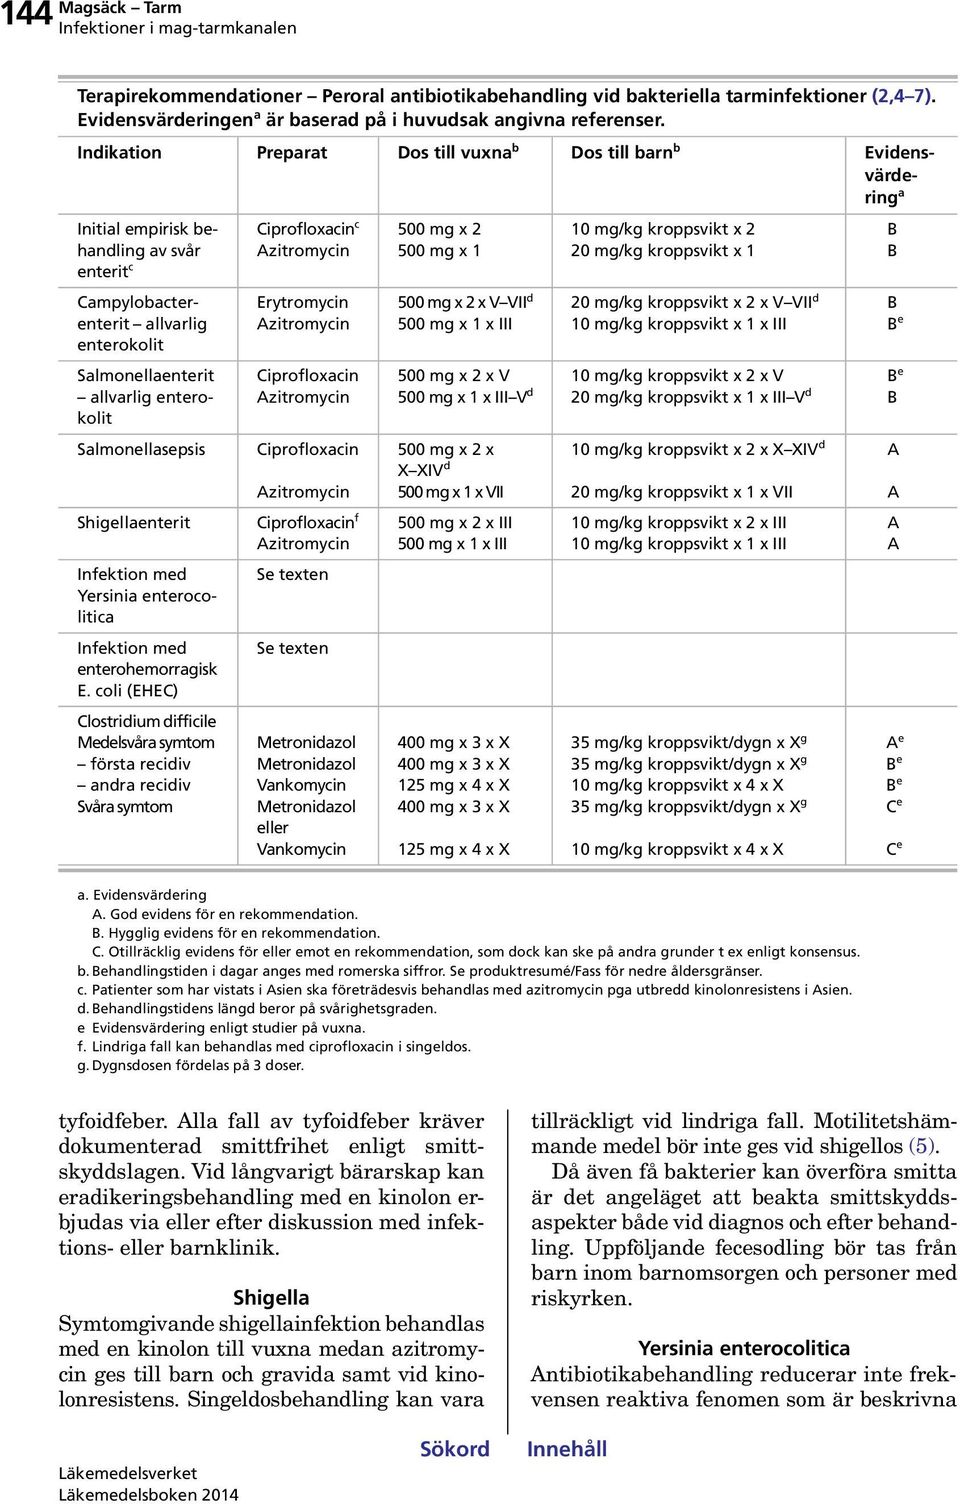 enterokolit Salmonellasepsis Shigellaenterit Infektion med Yersinia enterocolitica Infektion med enterohemorragisk E.